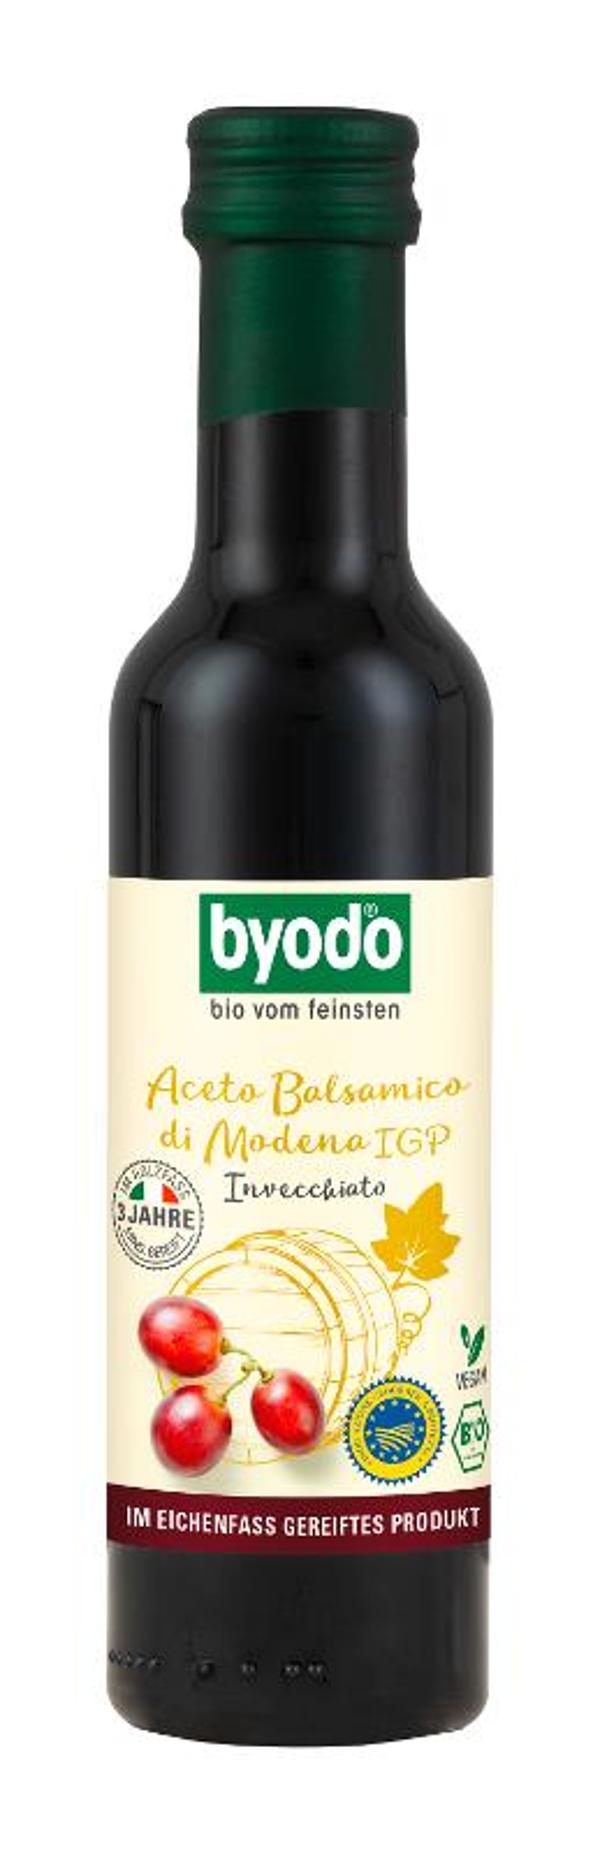 Produktfoto zu Aceto Balsamico Invecchiato